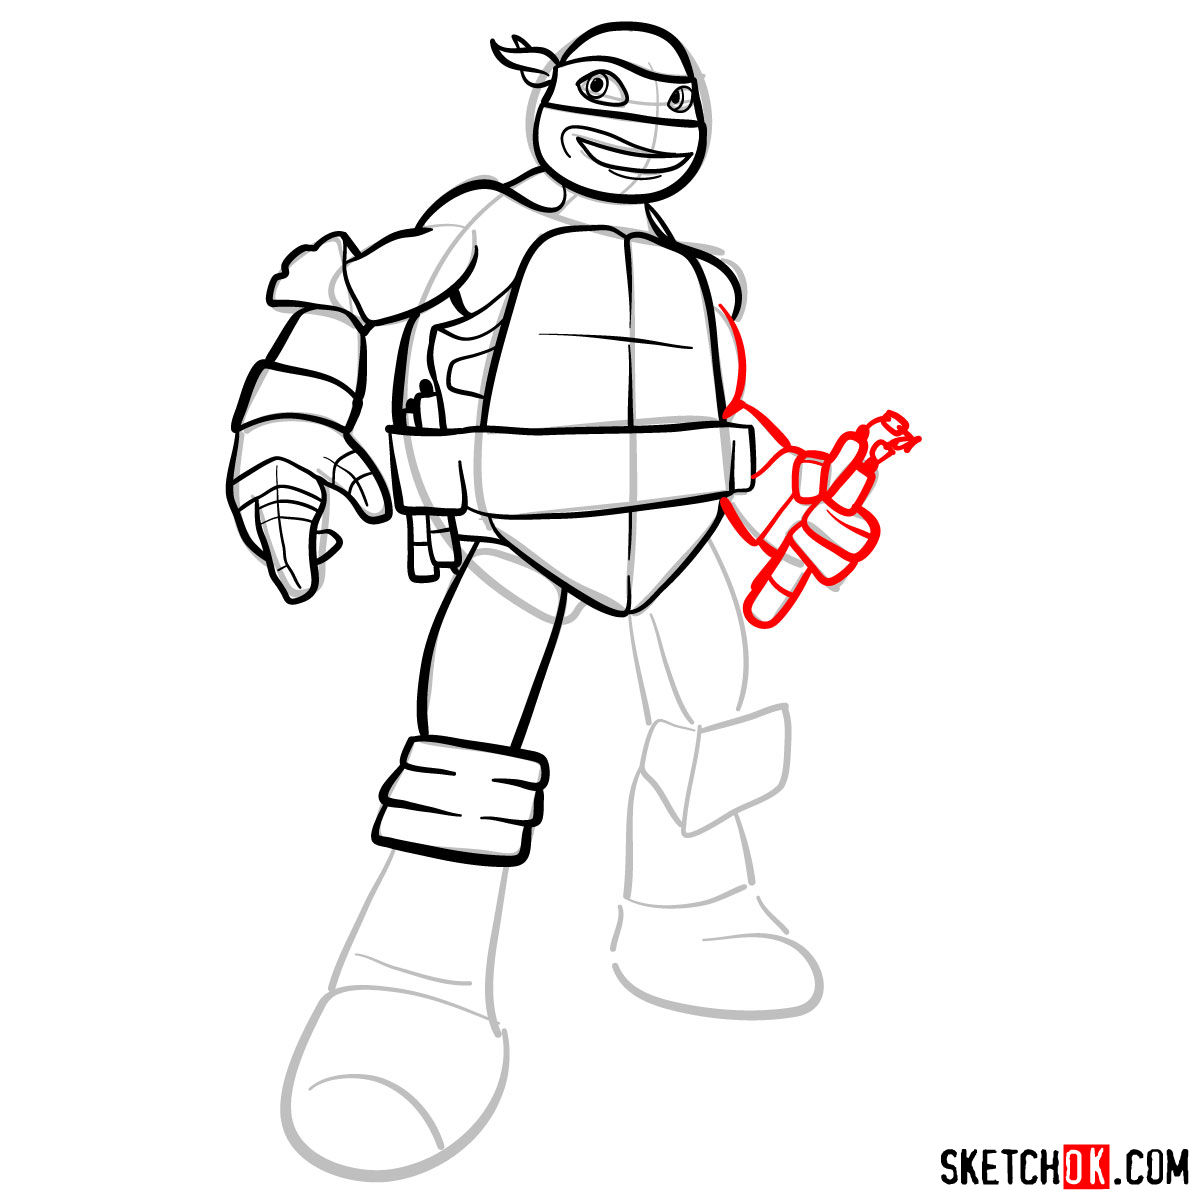 How to draw Michaelangelo ninja turtle cartoon style - step 09